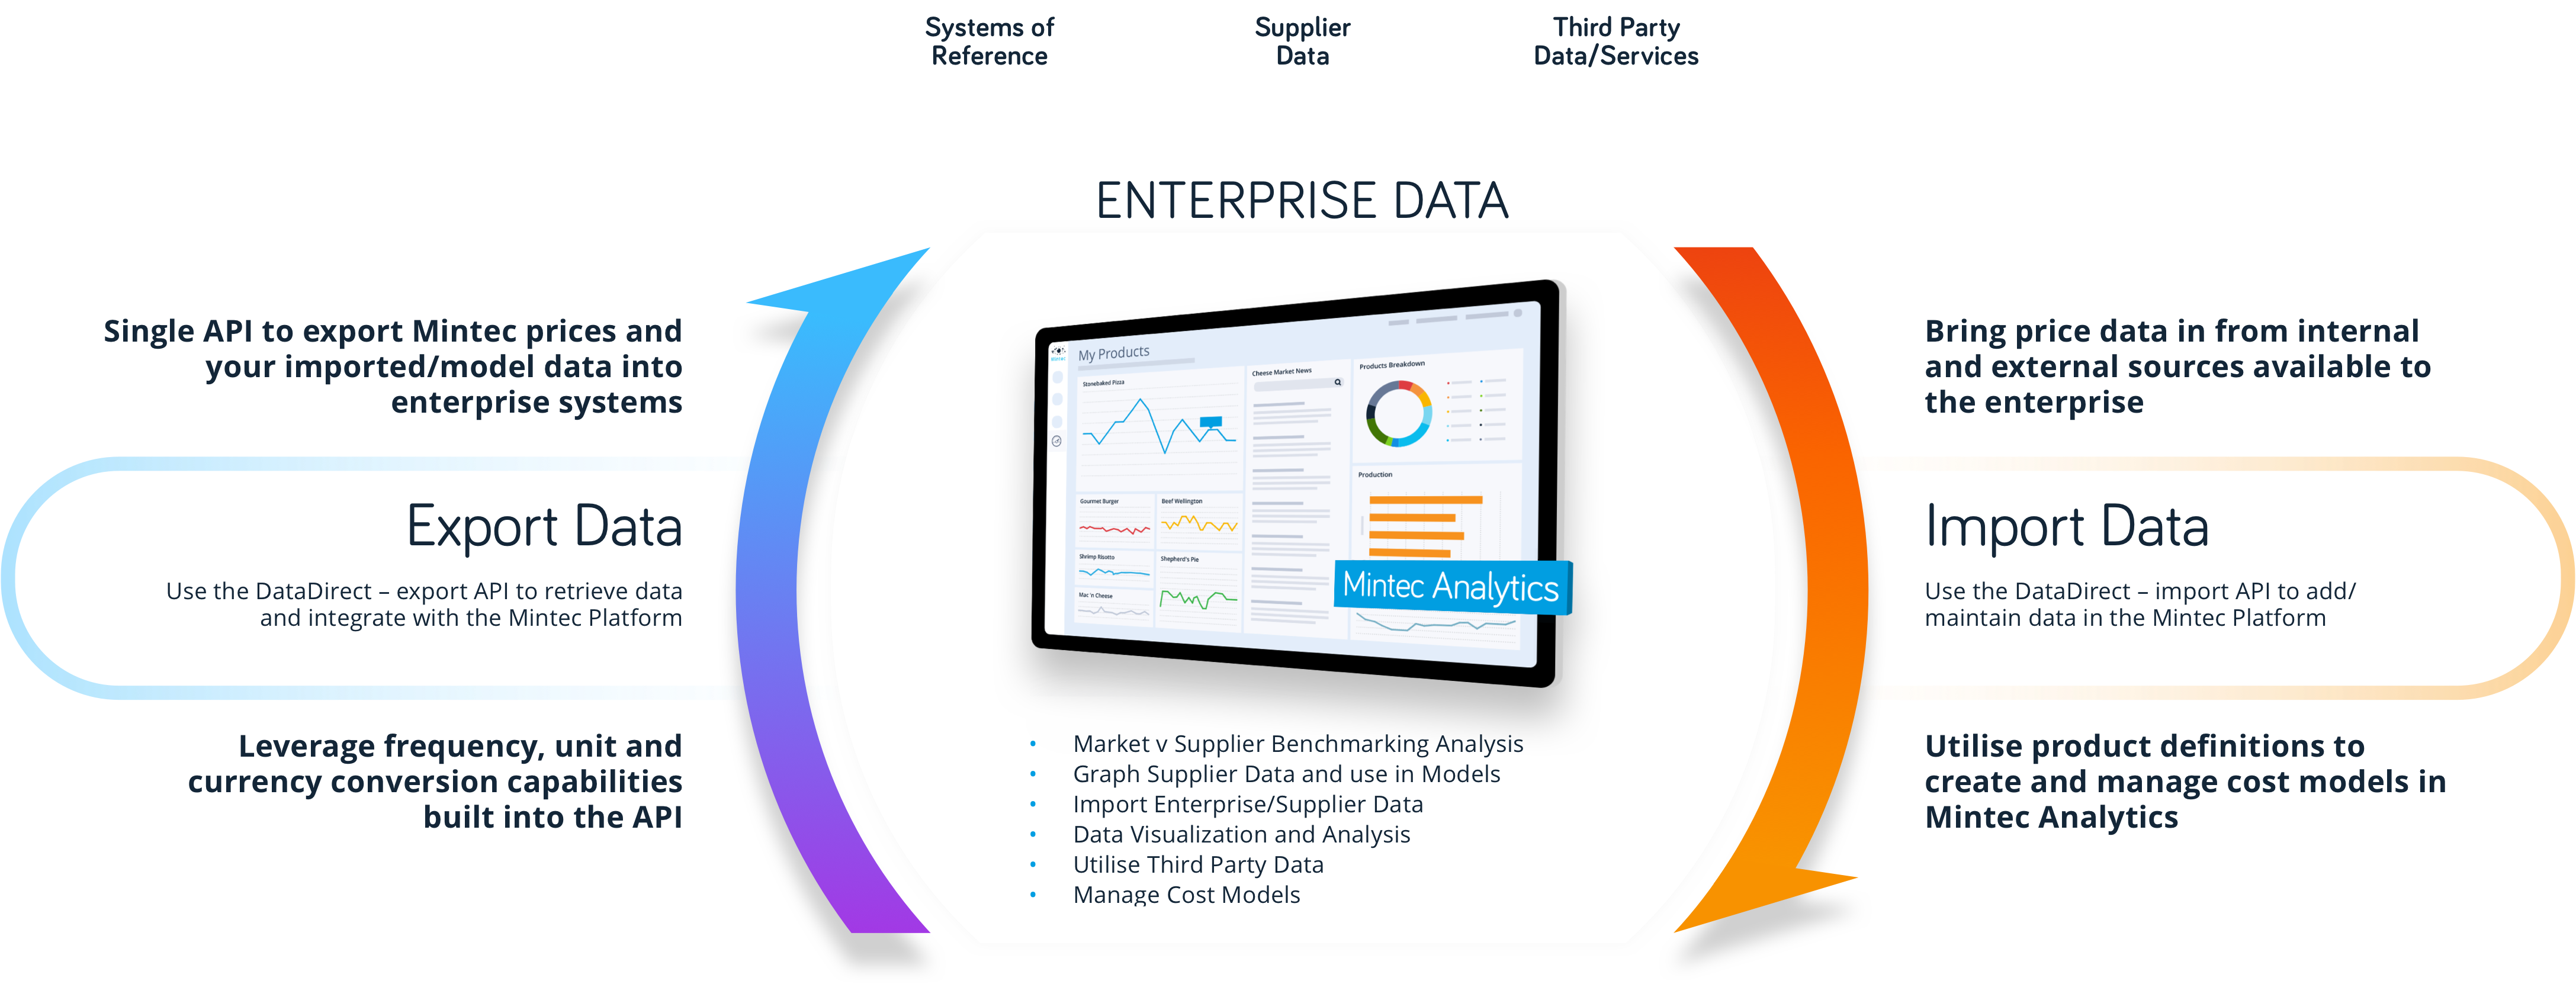 Enterprise_data_guide1